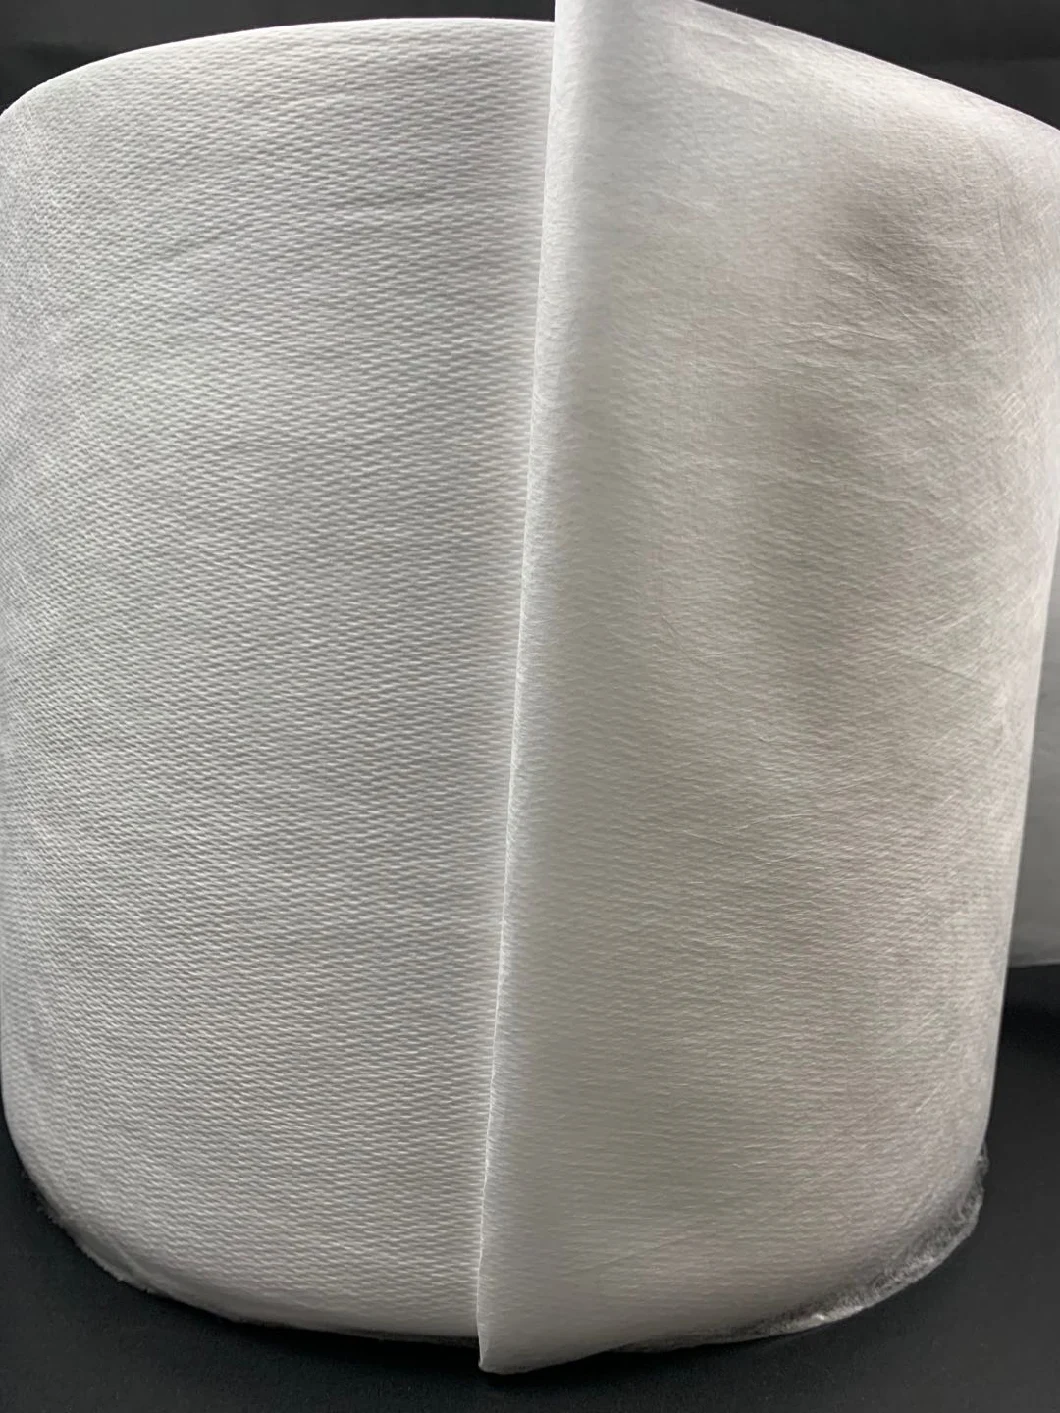 100% Polypropylene Non Woven Fabric 25-500GSM Meltblown Nonwoven Wholesale Fabric Rolls